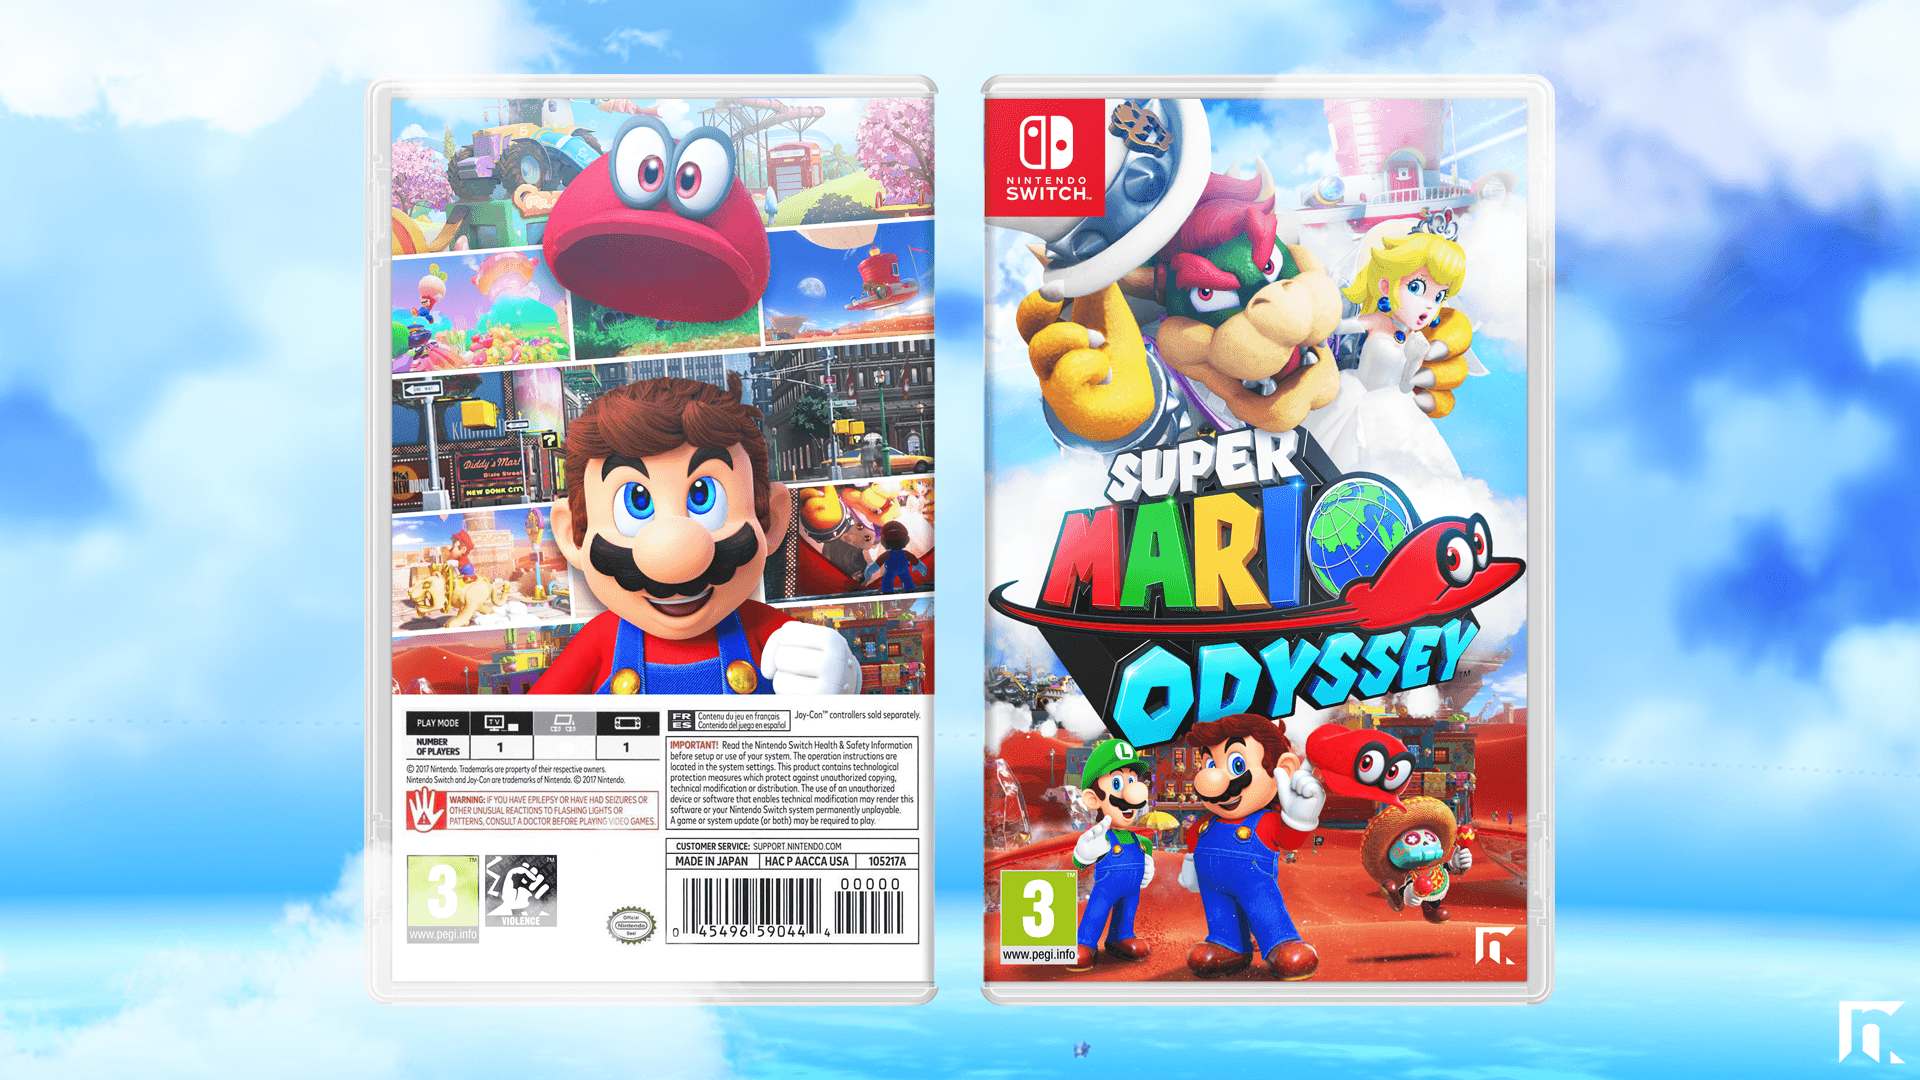 Игра супер марио супер нинтендо. Обложка super Mario Odyssey Nintendo Switch. Игра Марио для Нинтендо Switch. Диск супер Марио Одиссей Nintendo Switch. Nintendo Switch Cover super Mario Odyssey.